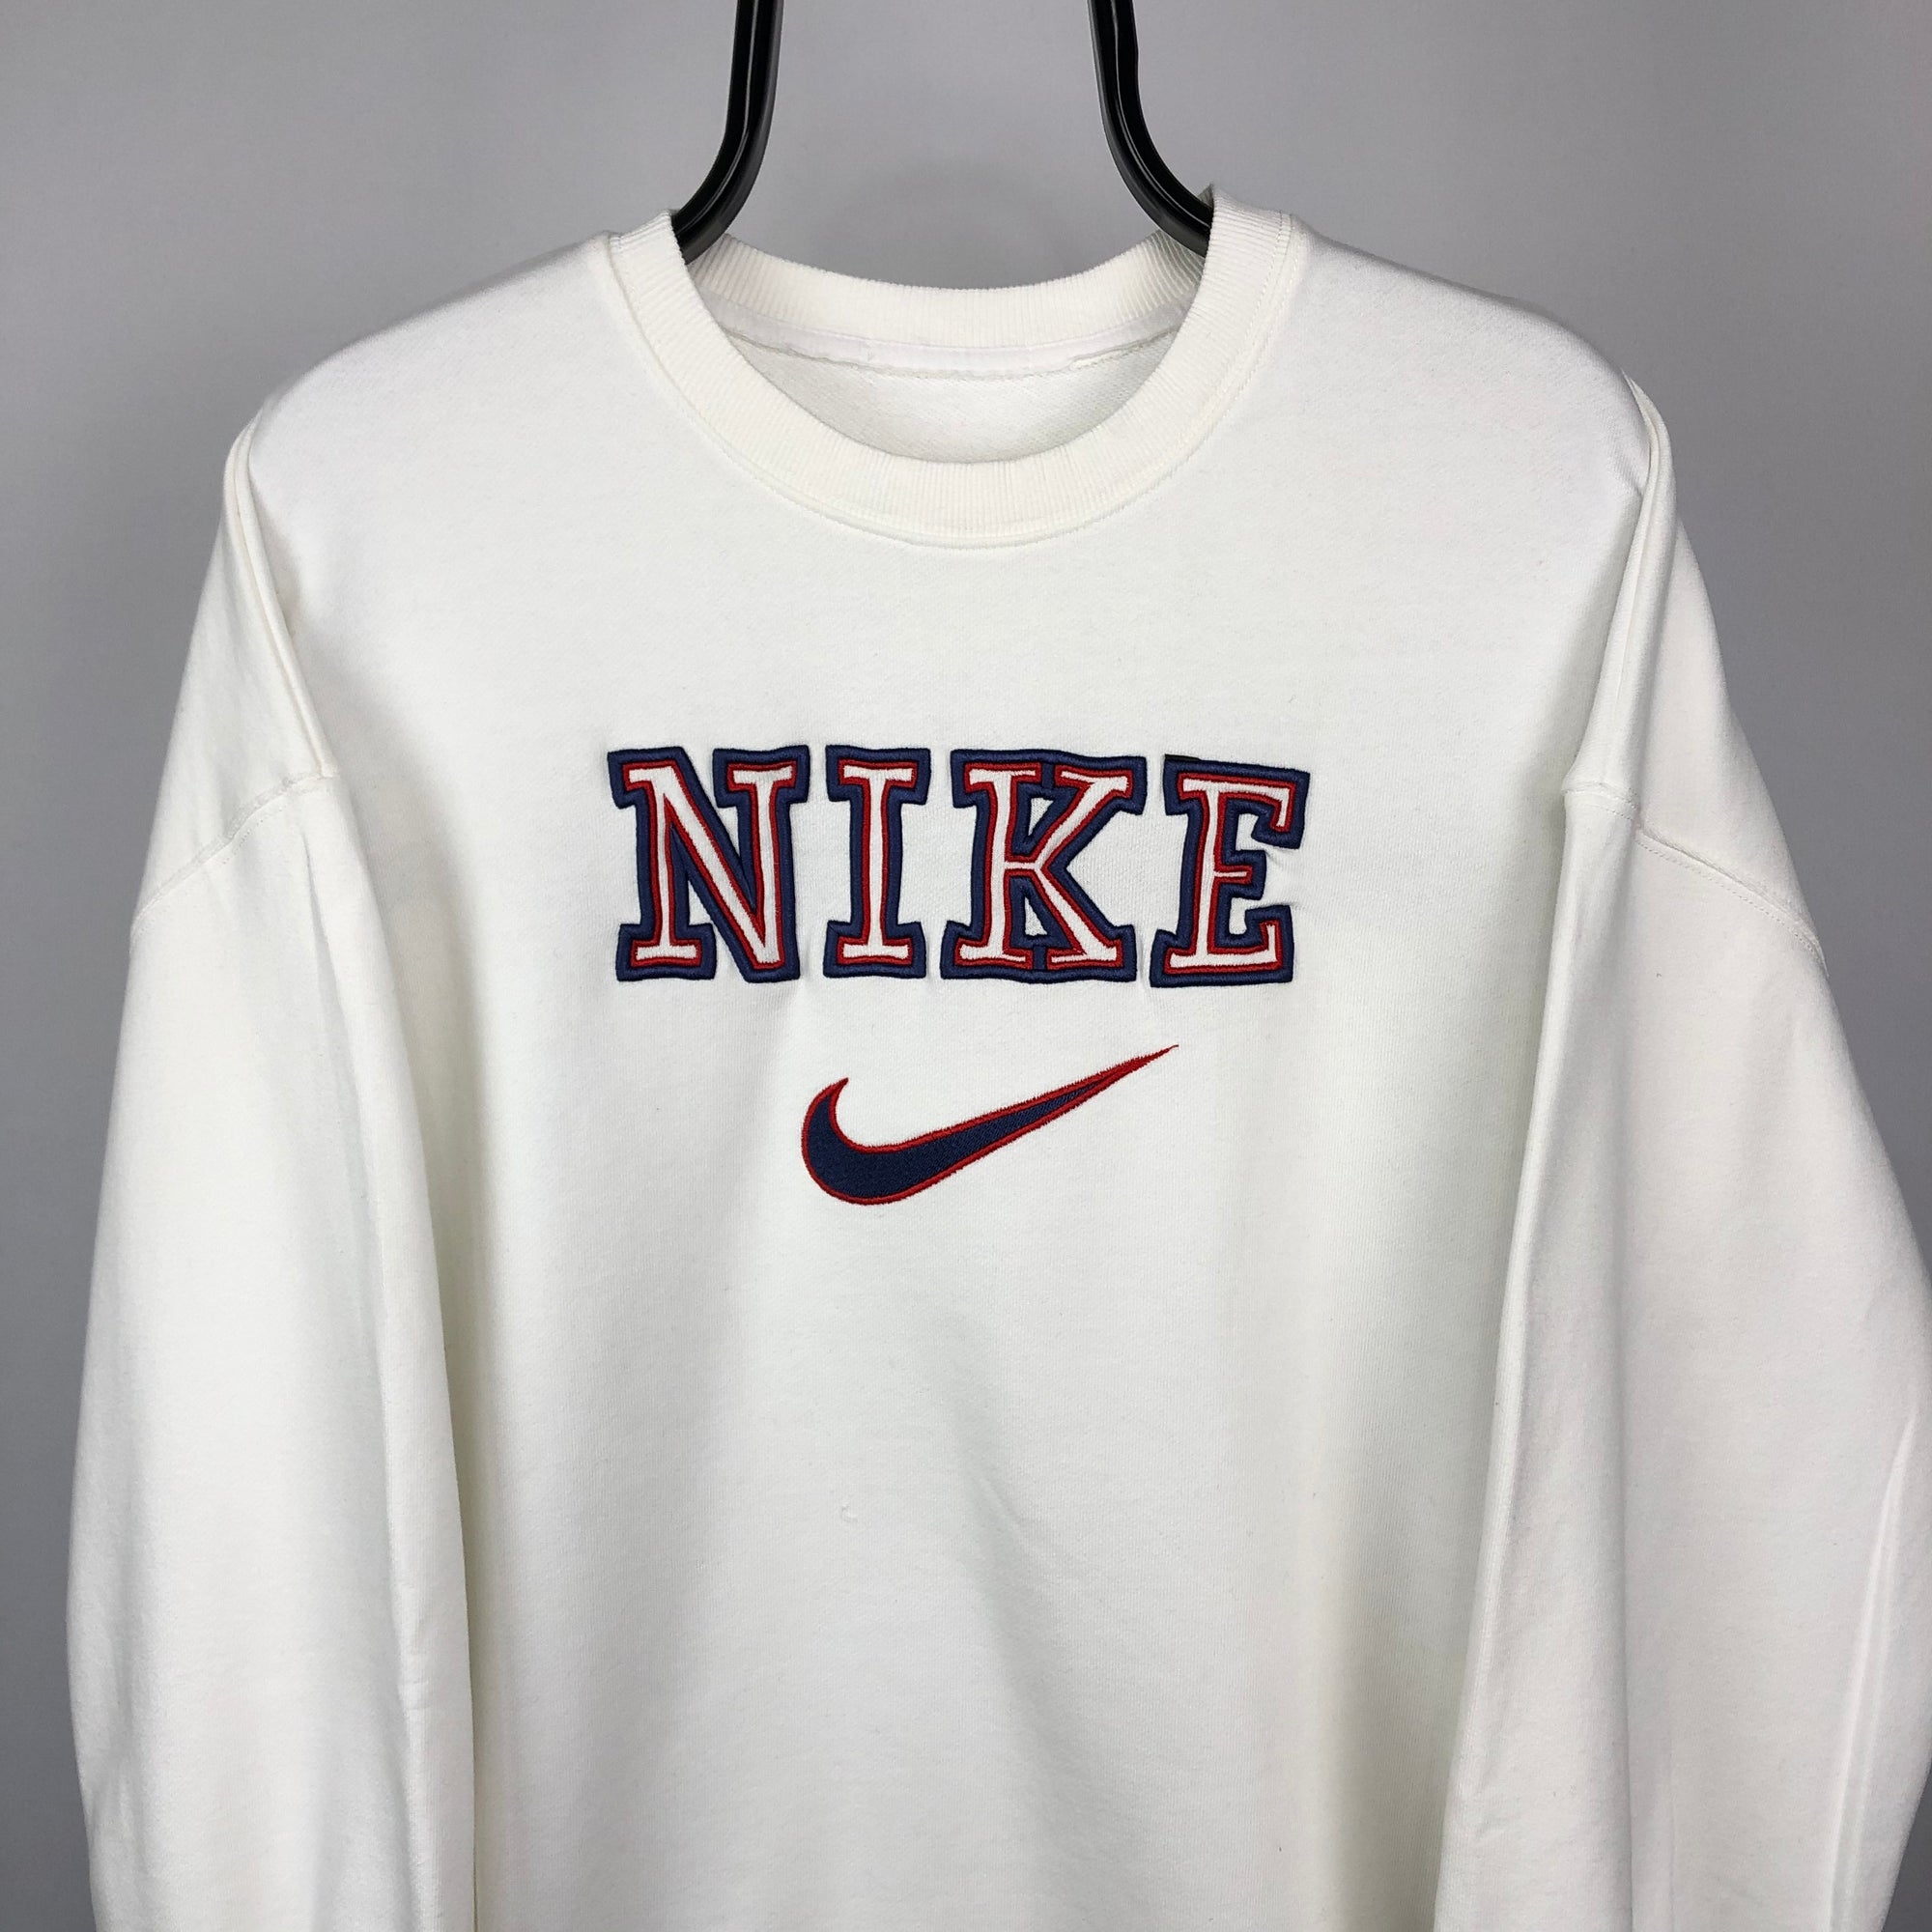 Nike Spellout Sweatshirt in White/Red/Blue - Men's Medium/Women's Large